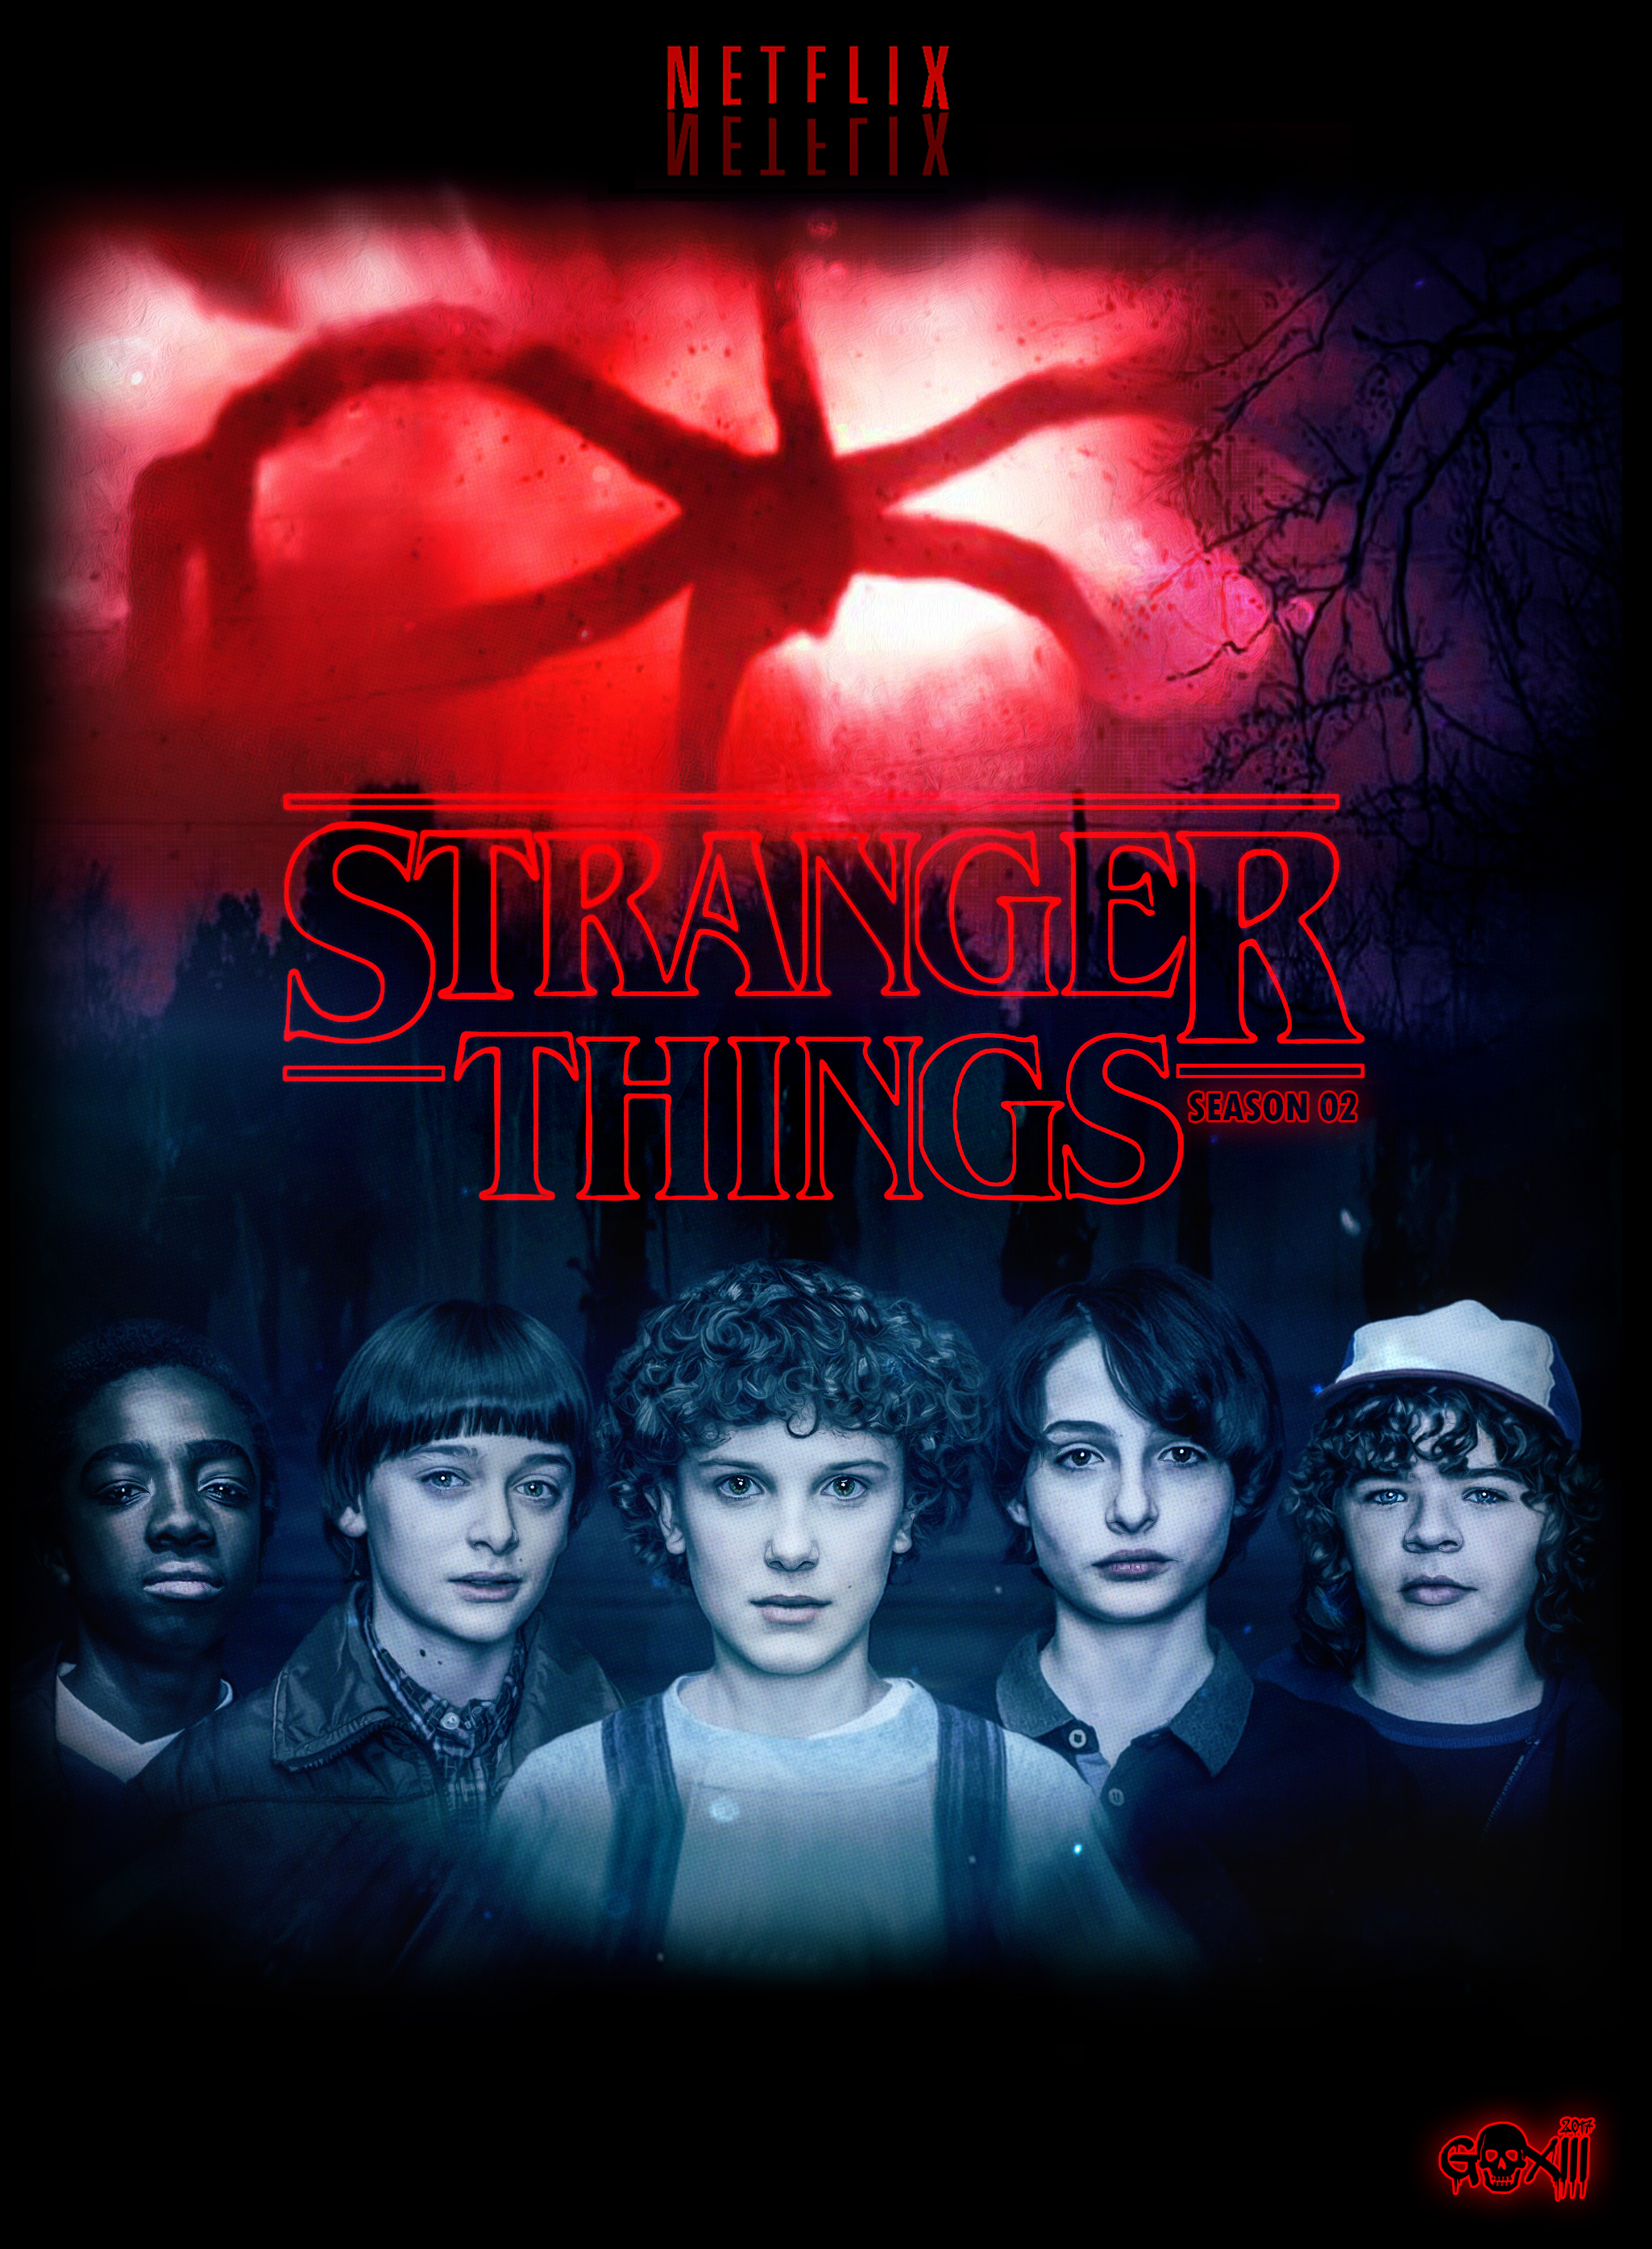 Stranger Things season 2 Poster by GOXIII on DeviantArt